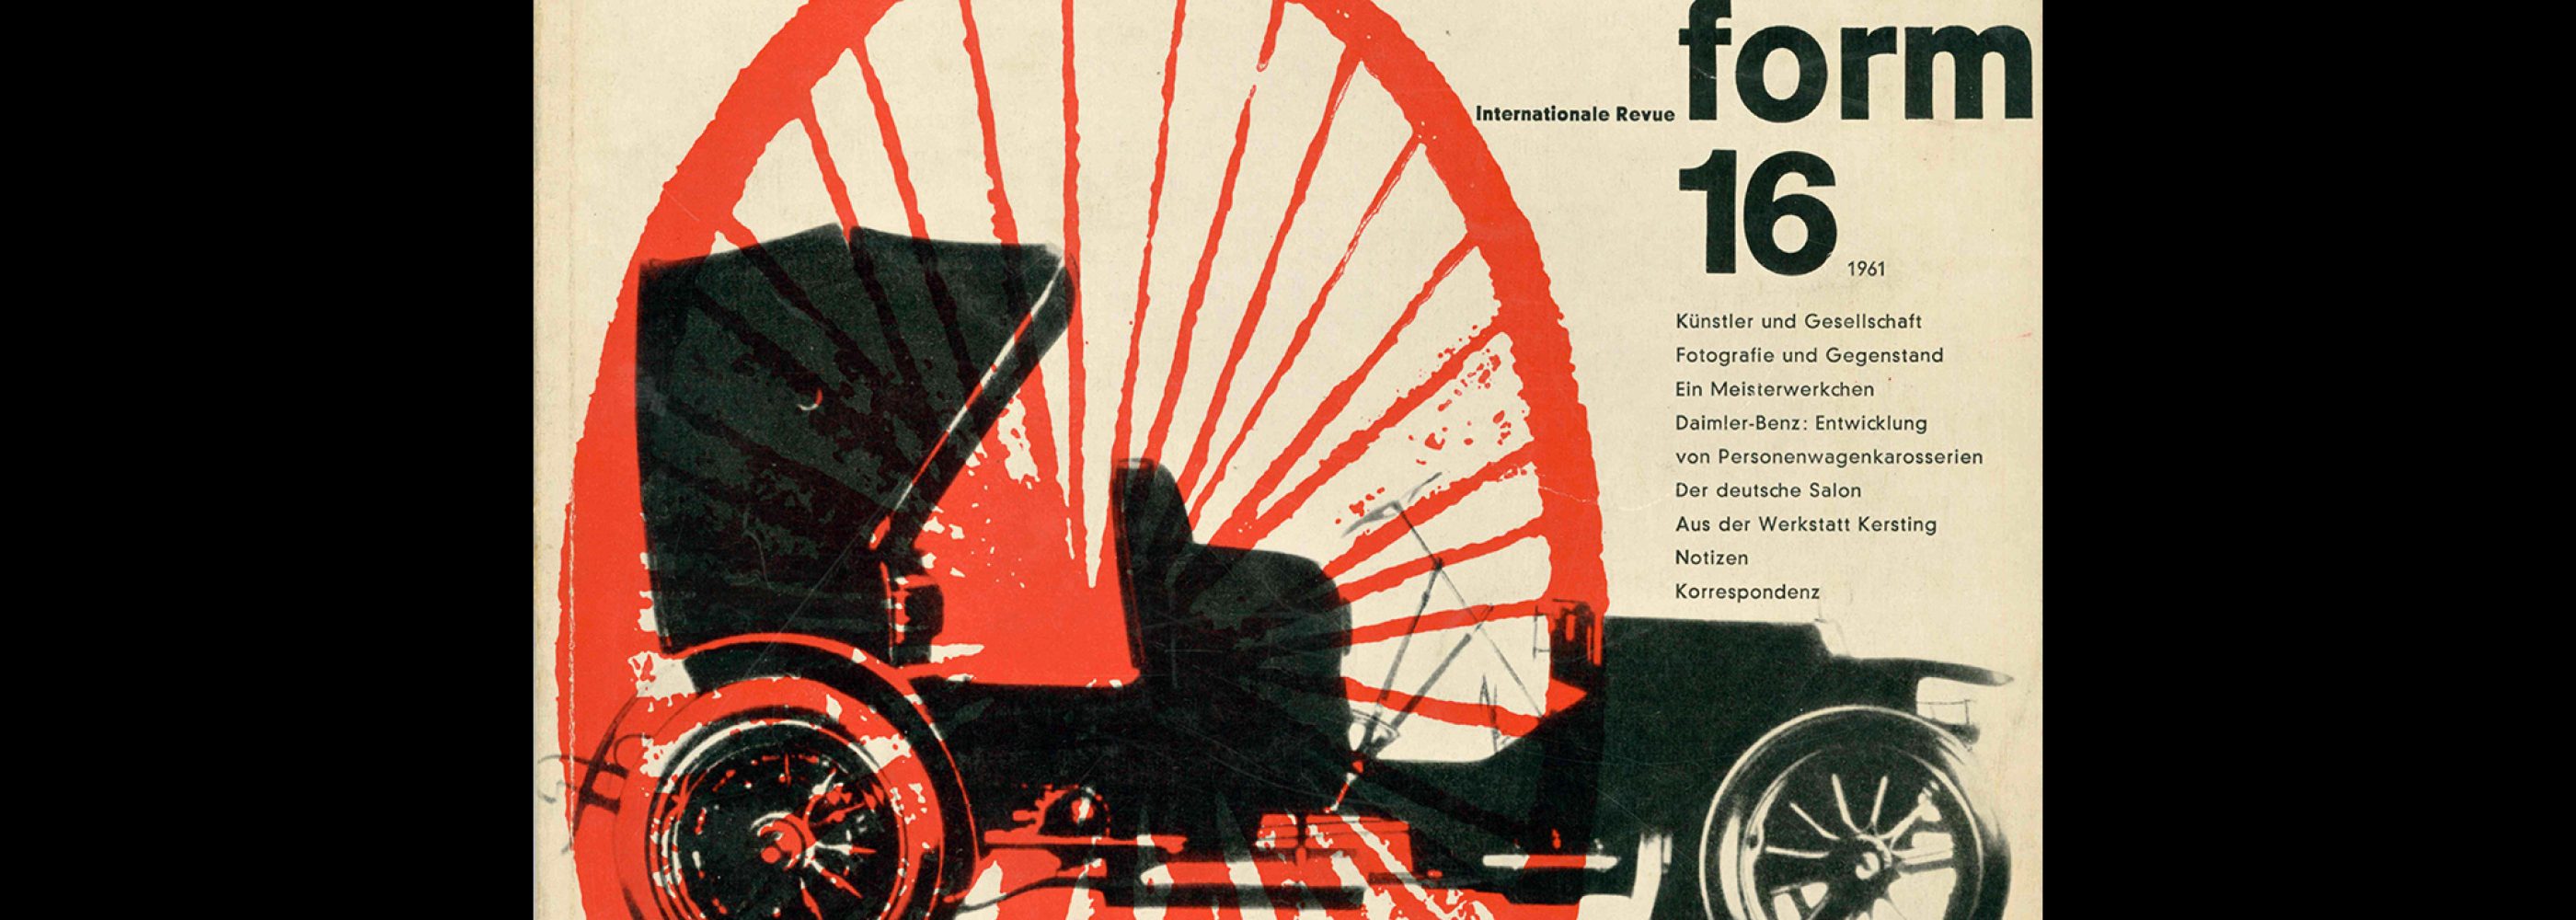 Form, Internationale Revue 16, 1961. Designed by Karl Oskar Blase